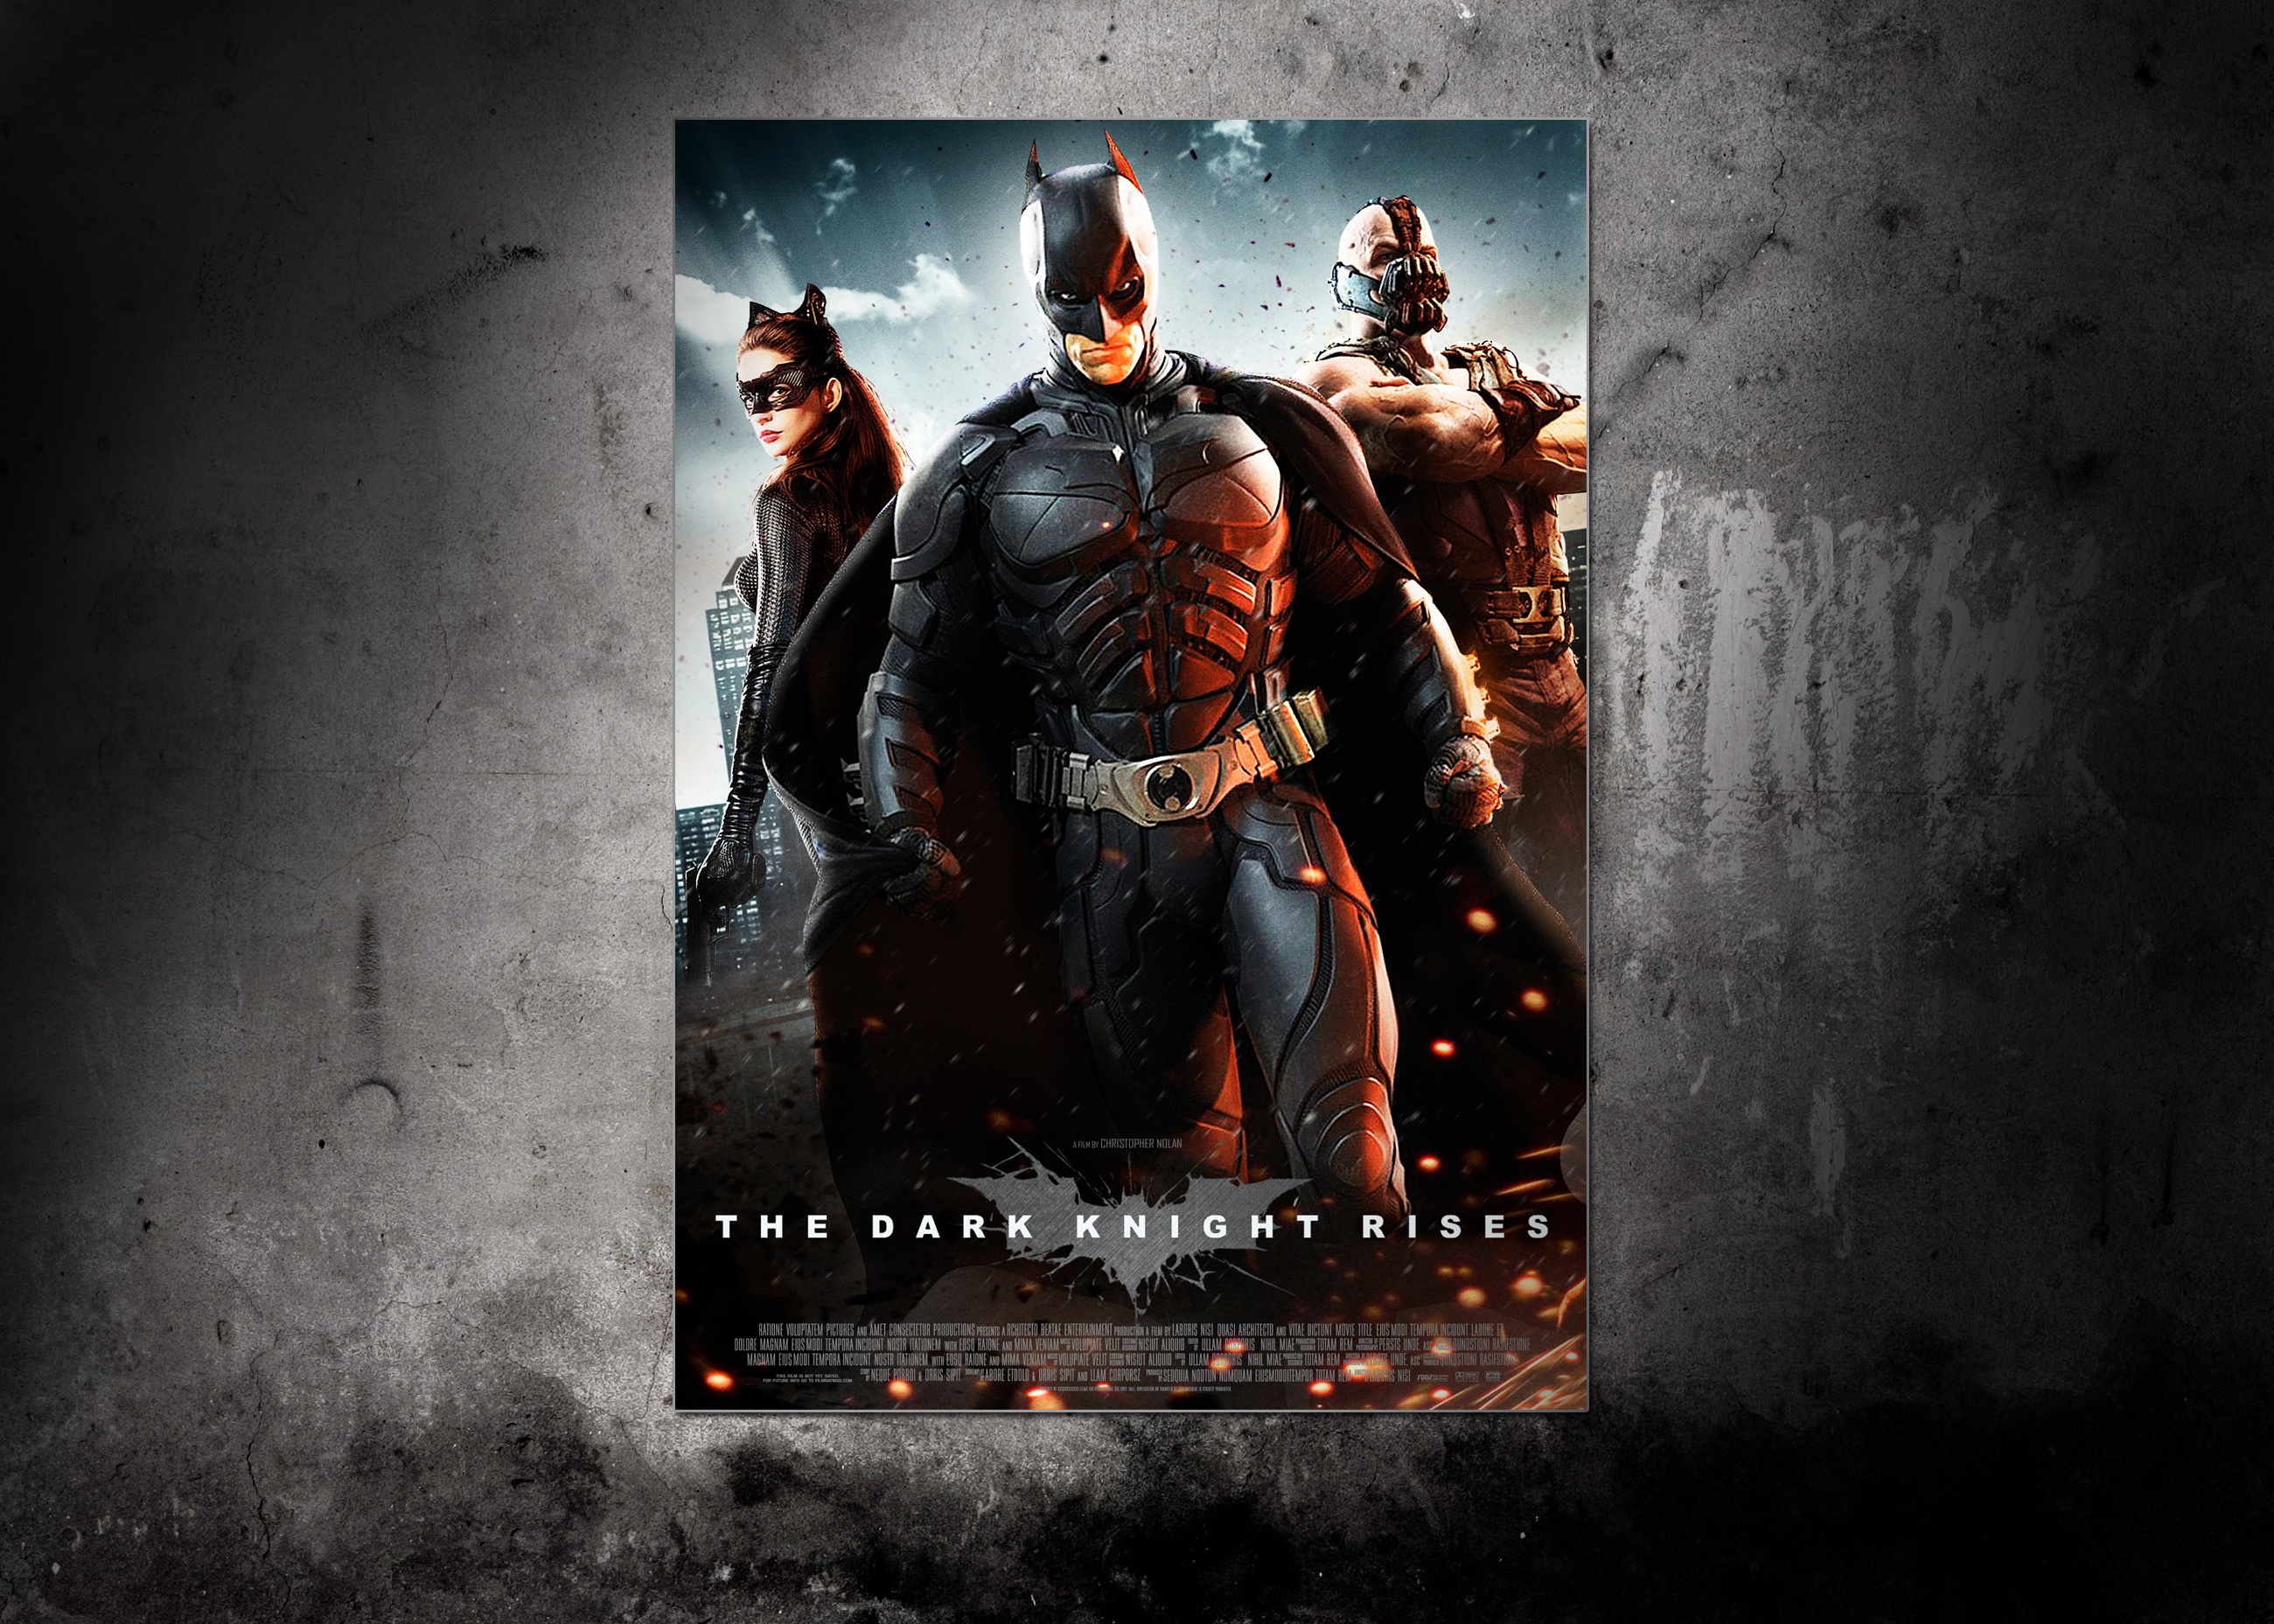 The Dark Knight Rises Poster box cover